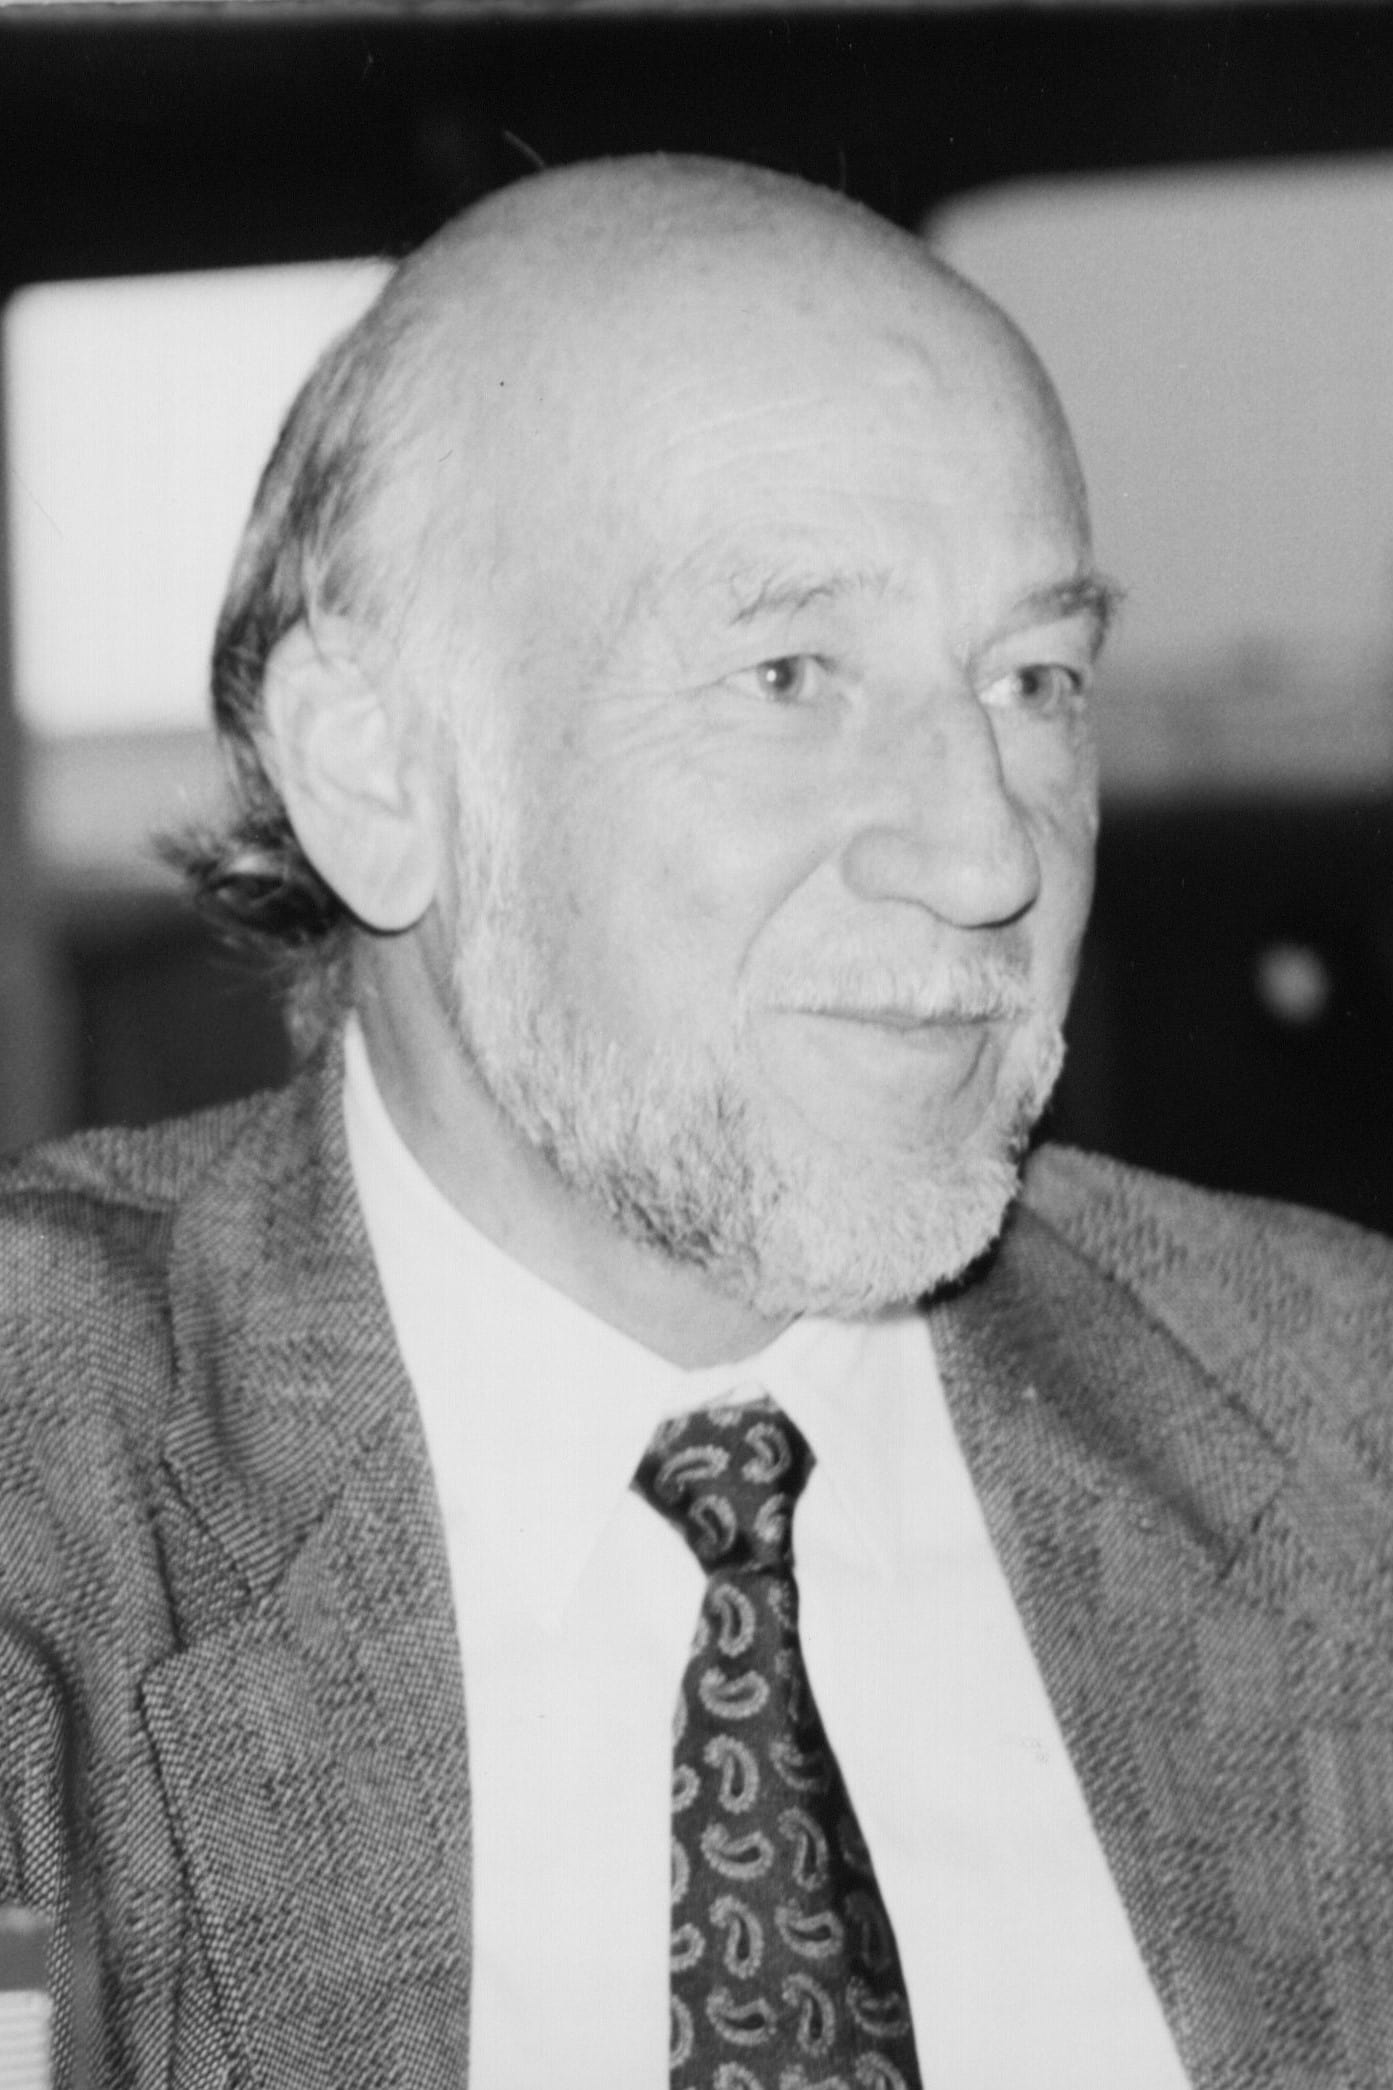 Adolfo Marsillach